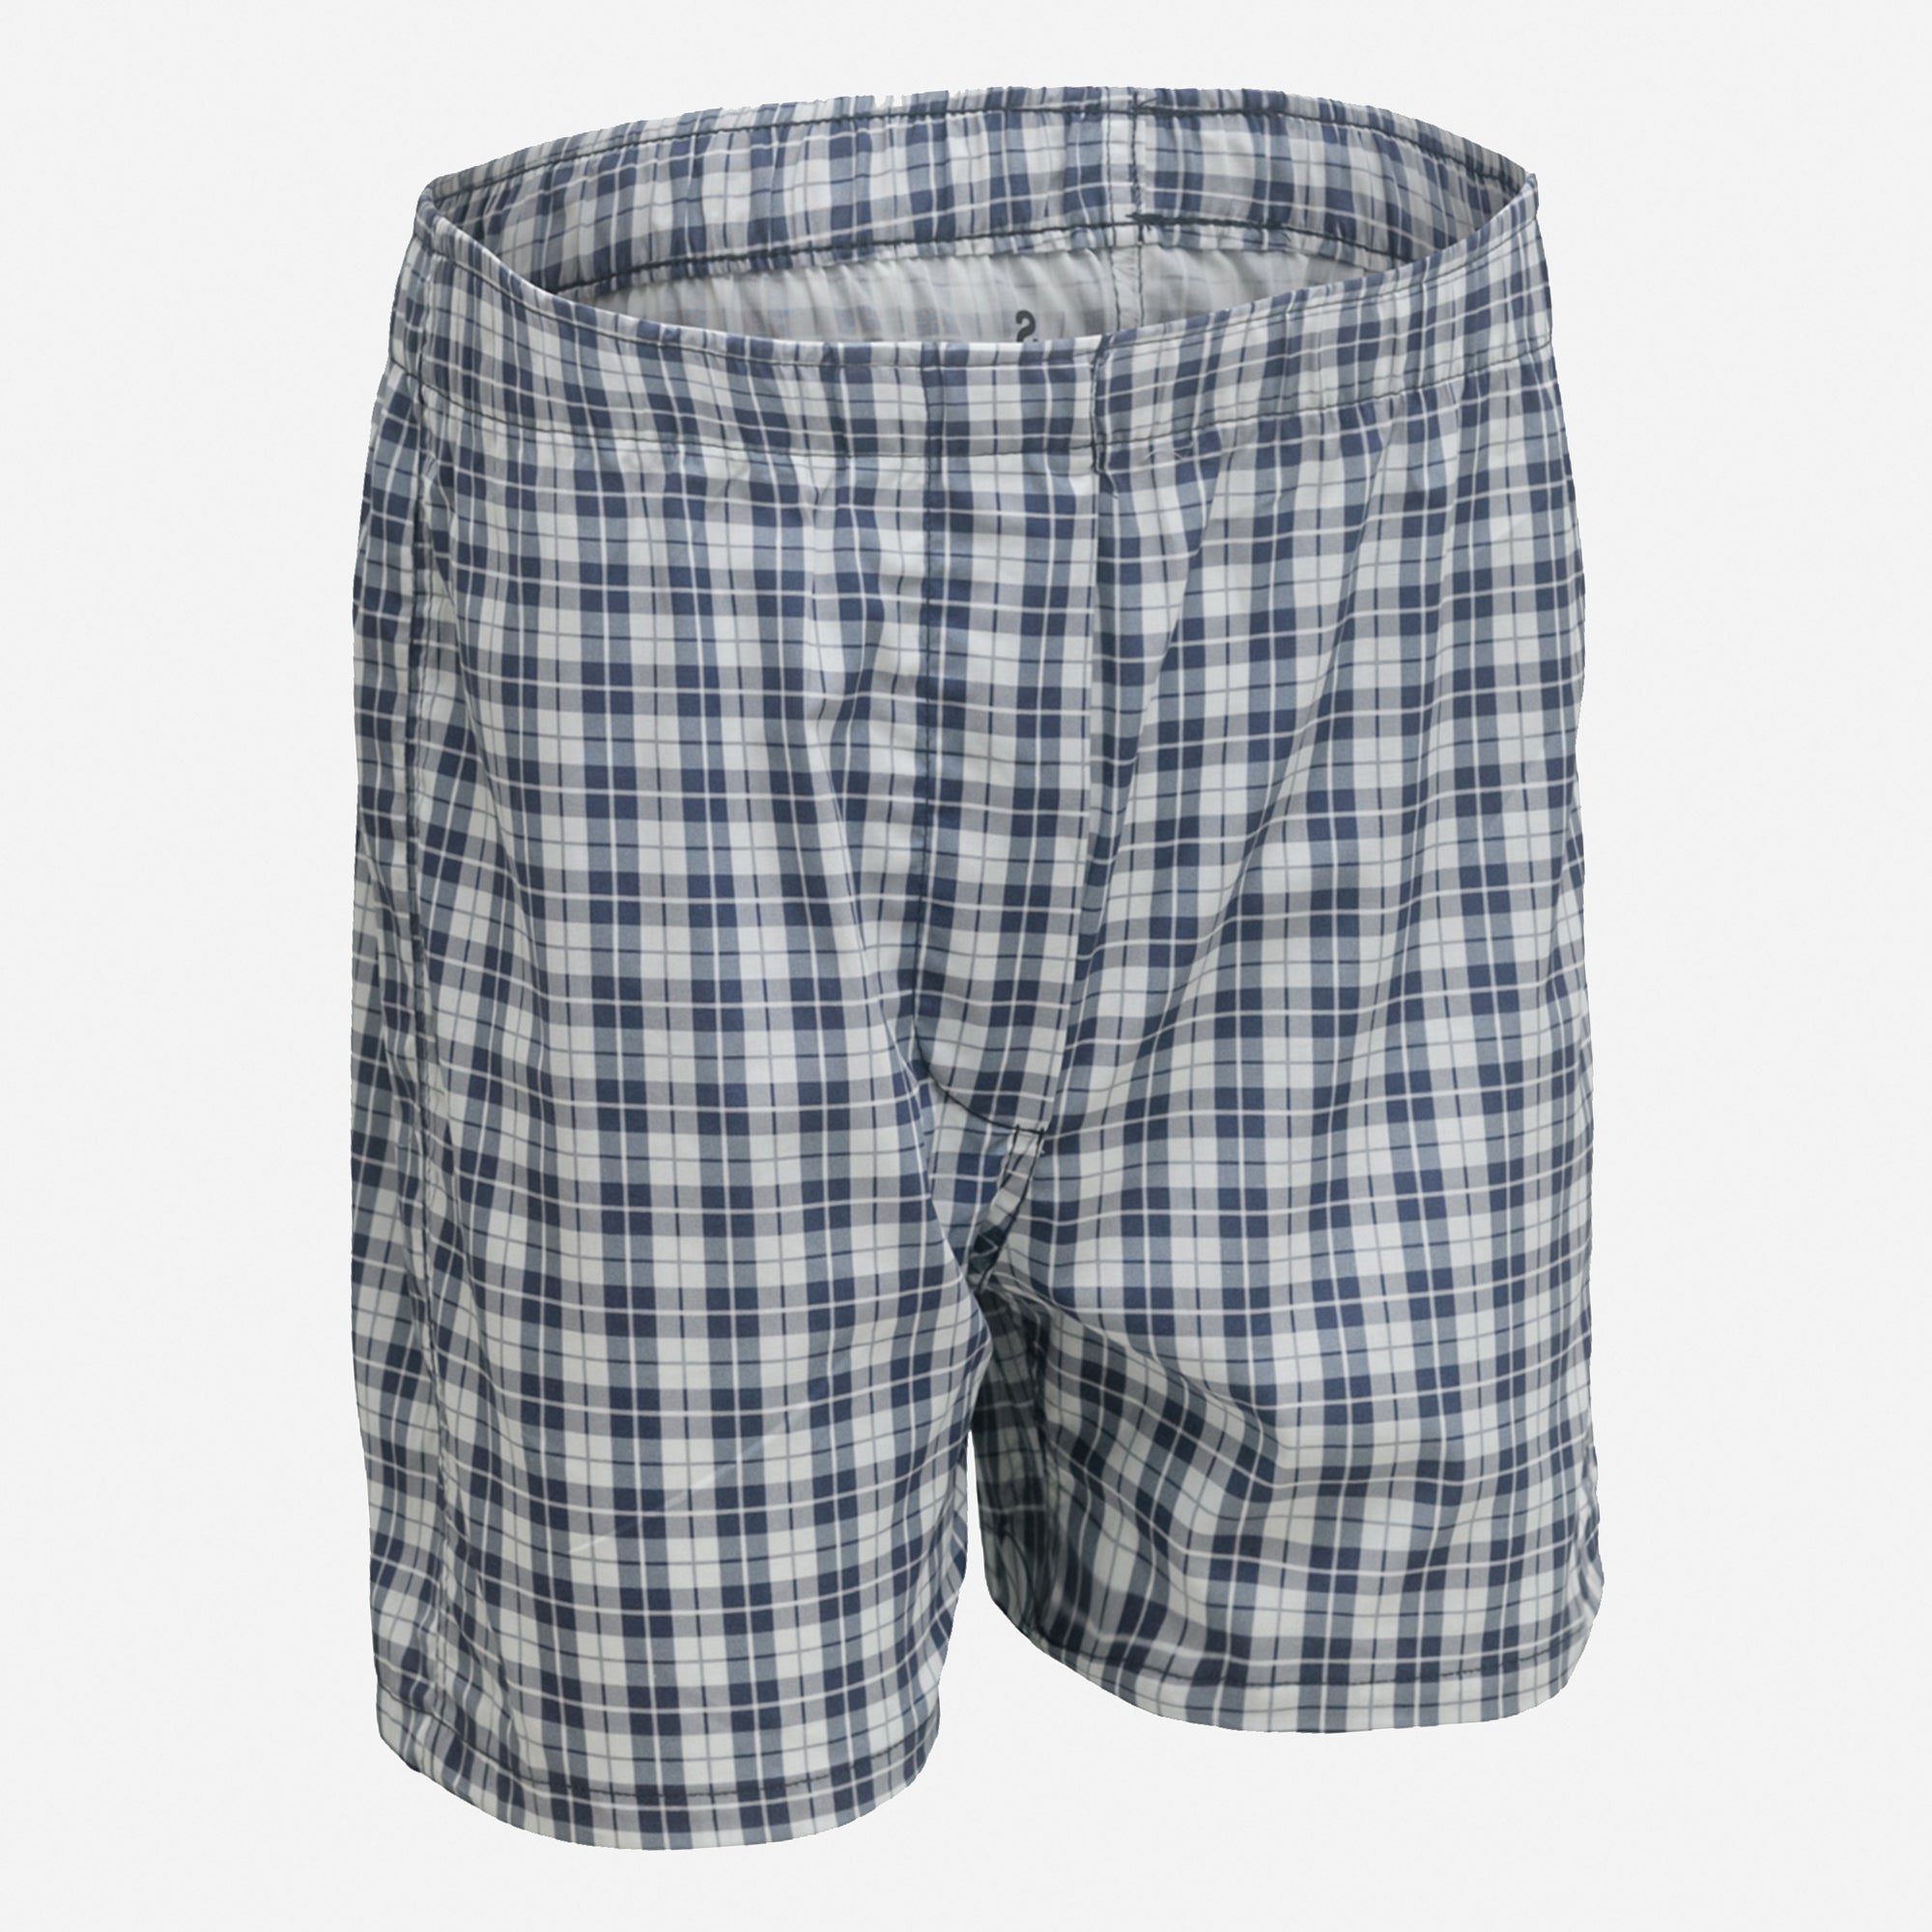 Men's 100% Cotton Boxer Shorts Waistband Check Print Boxers